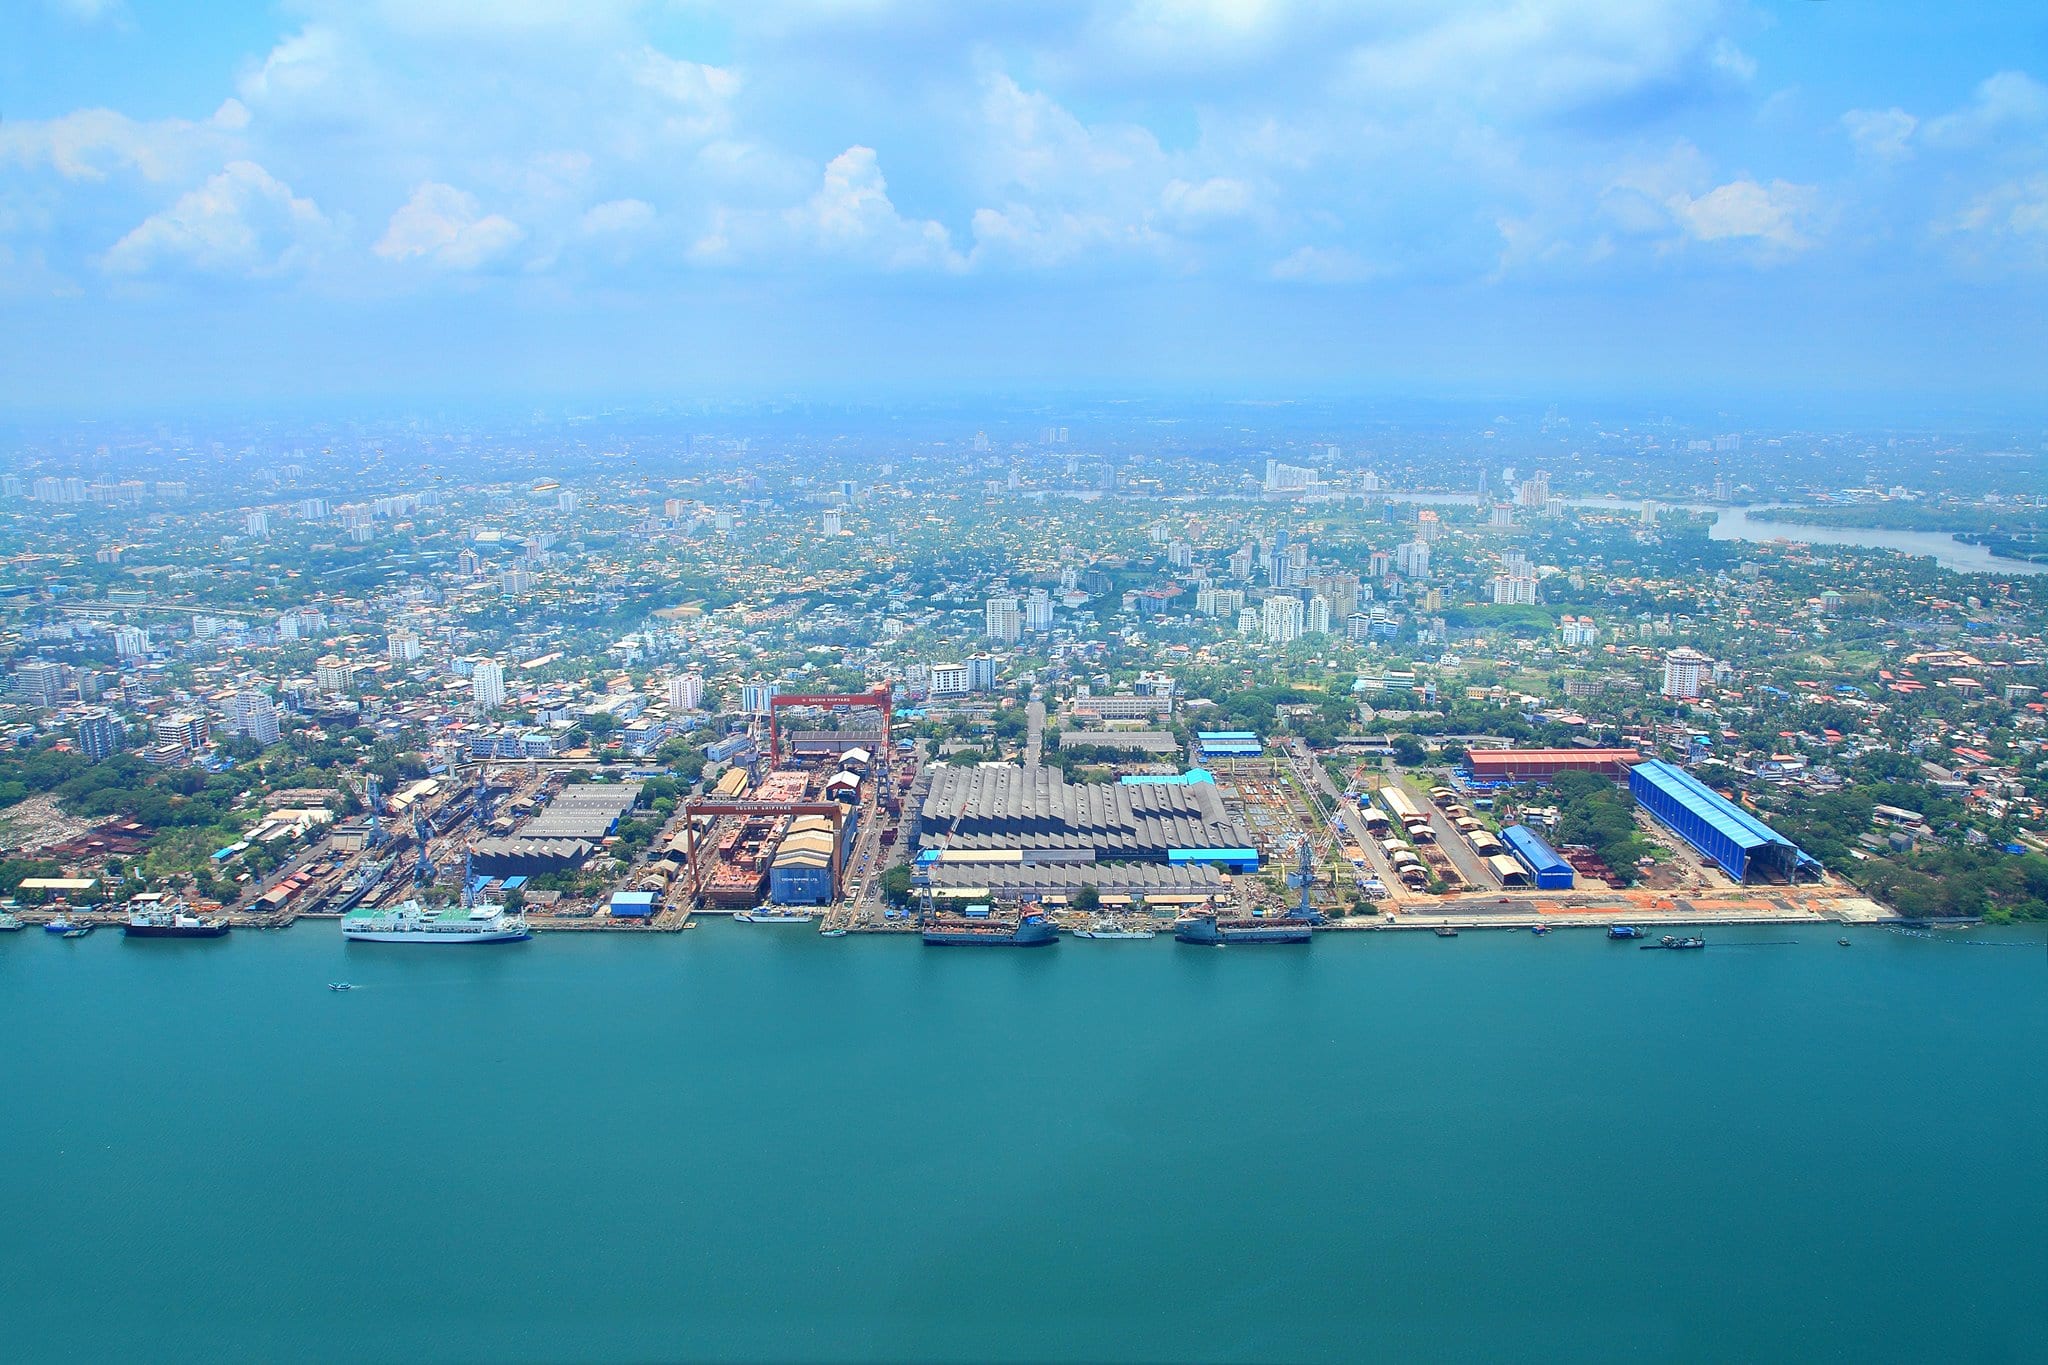 Cochin Shipyard Ltd Announces Recruitment of 68 Executive Trainees in Six Engineering Disciplines